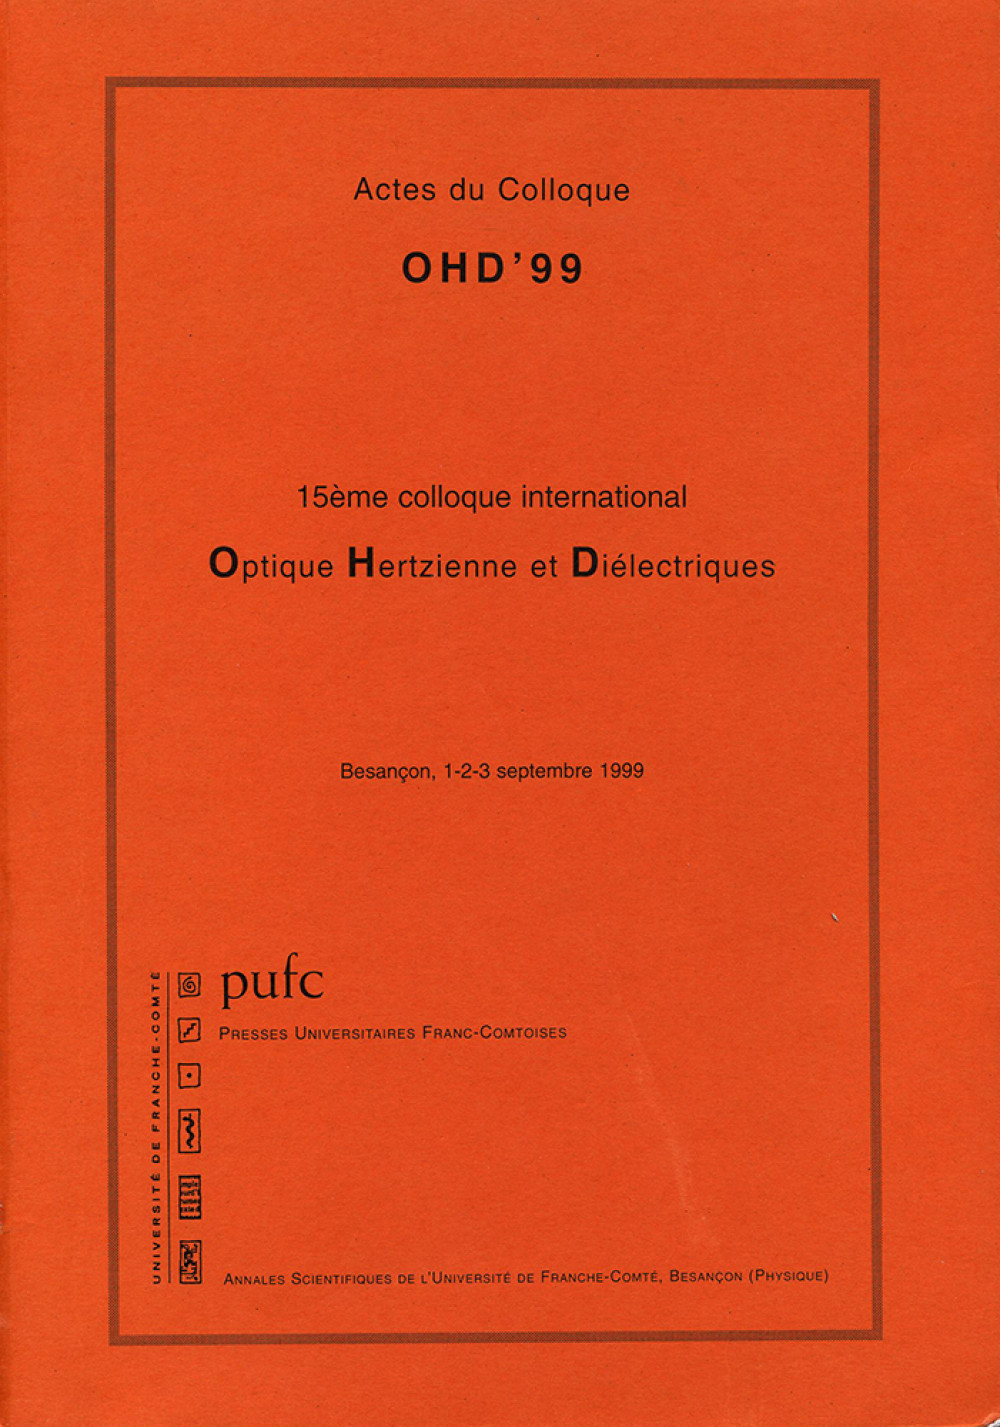 Colloque OHD'99 (optique) septembre 1999